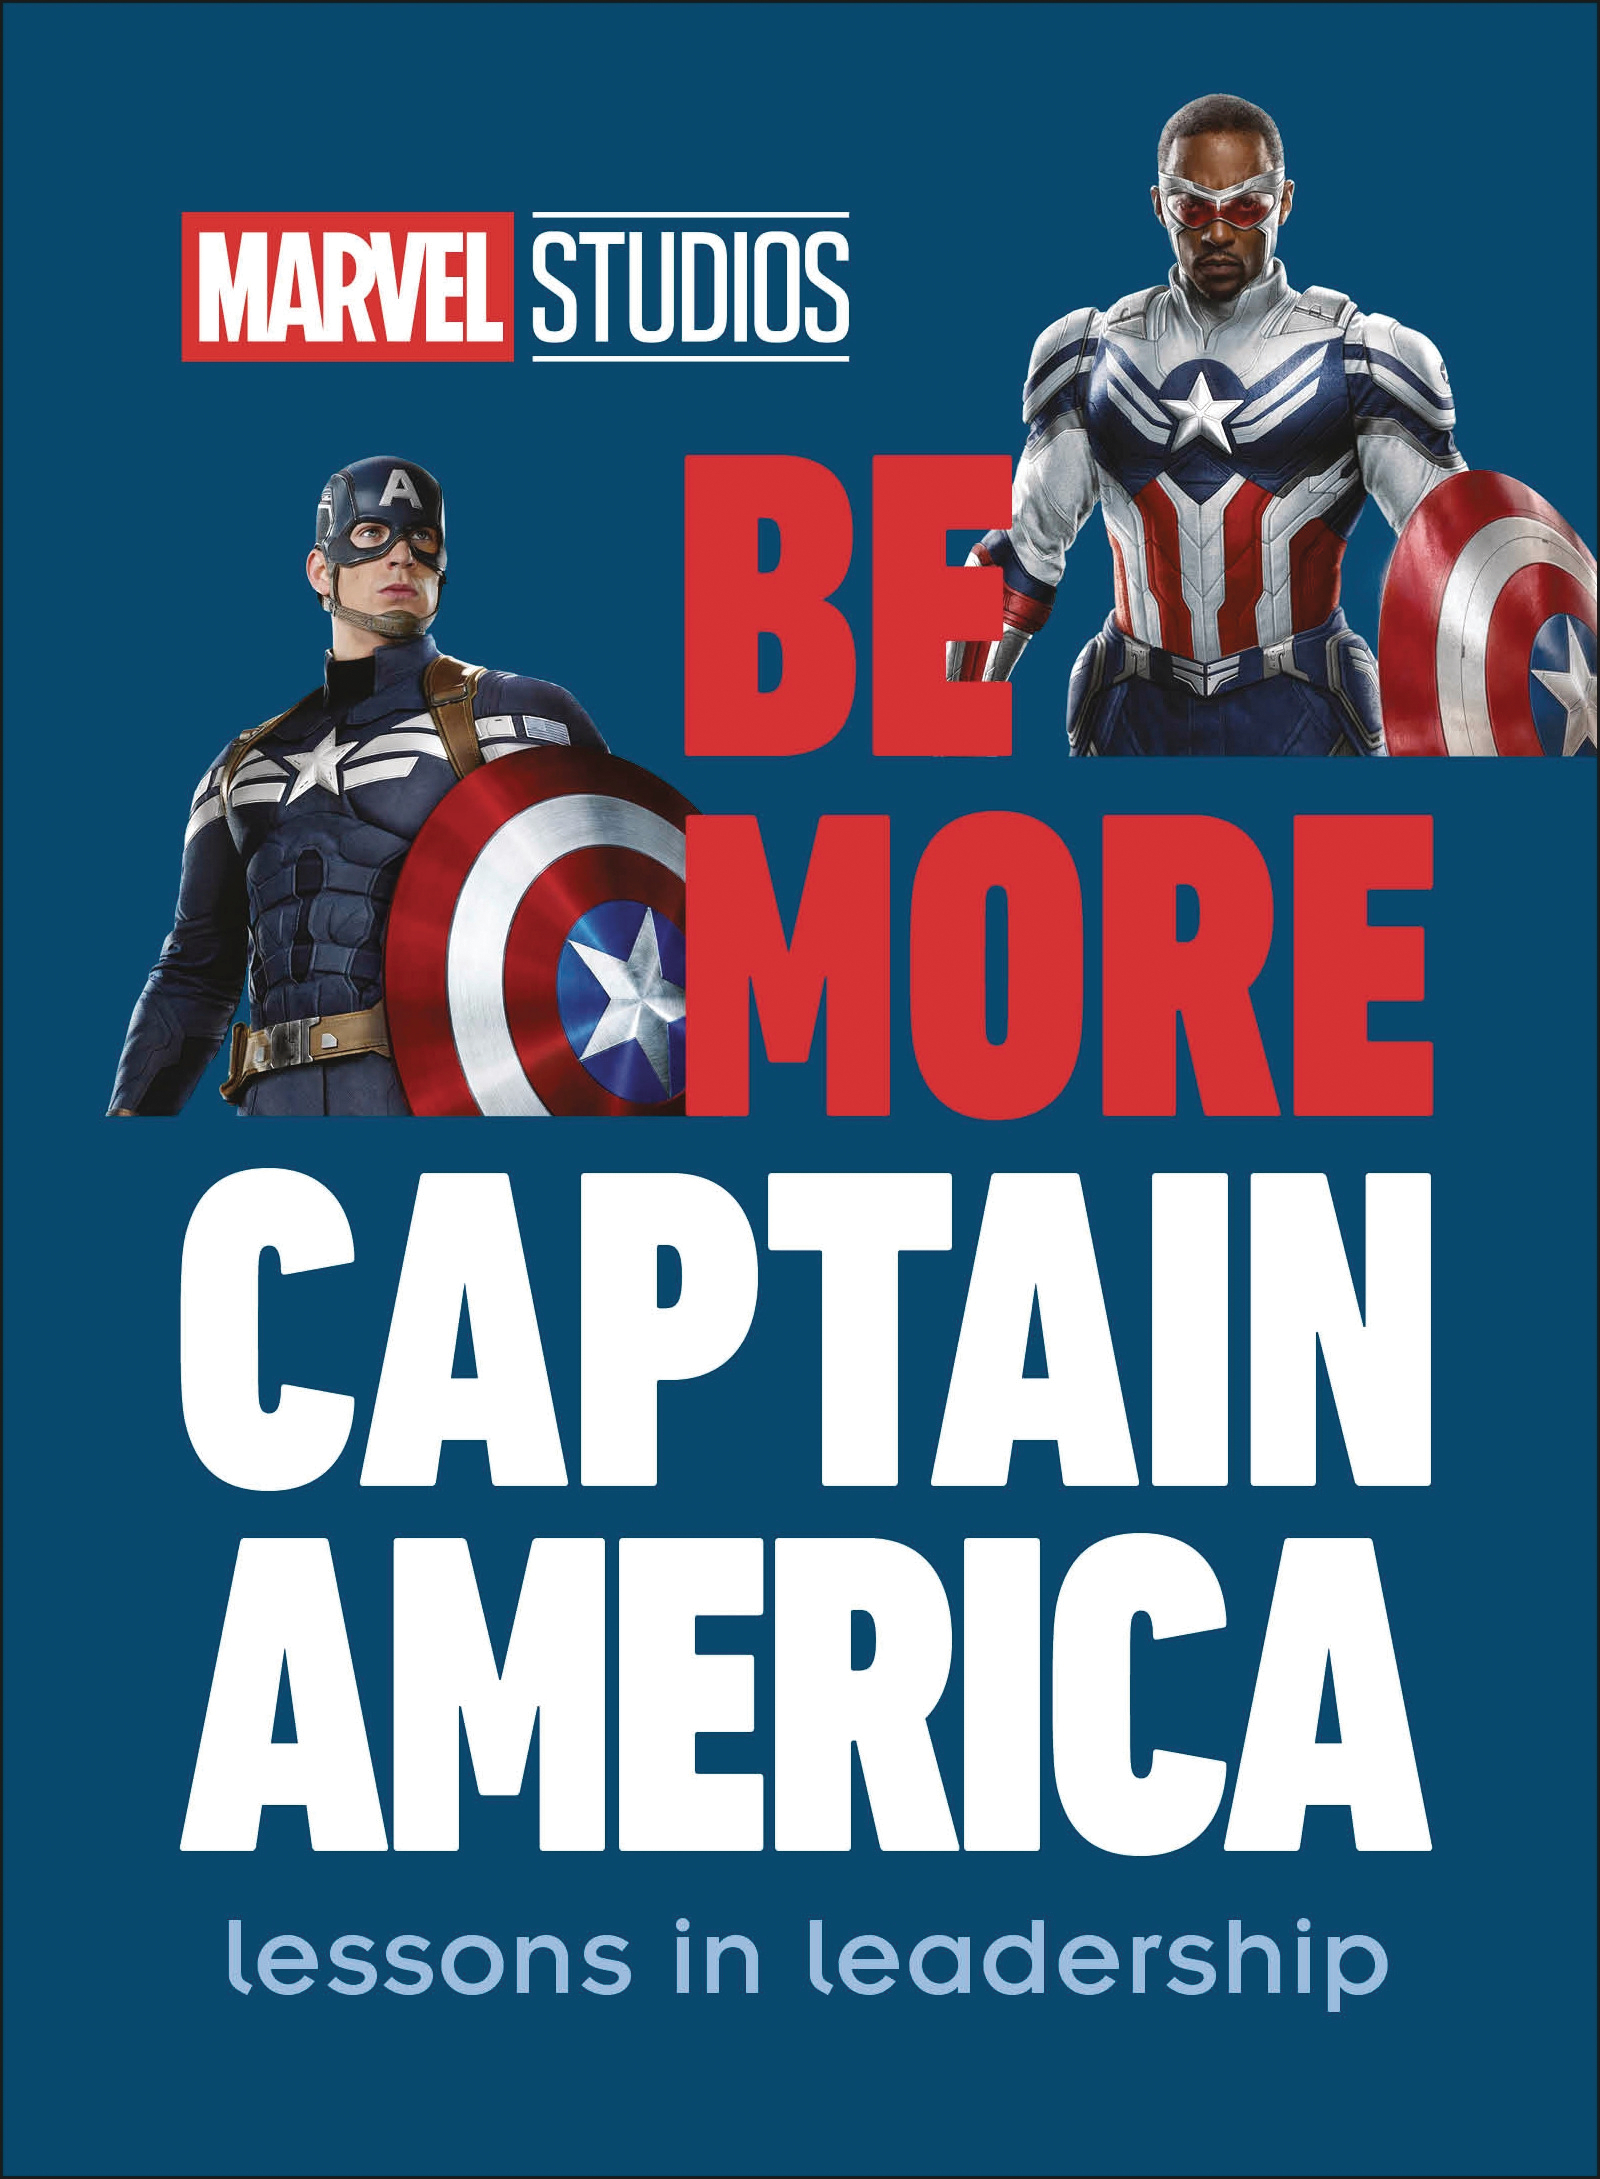 Buy Marvel Studios' Captain Marvel - Microsoft Store